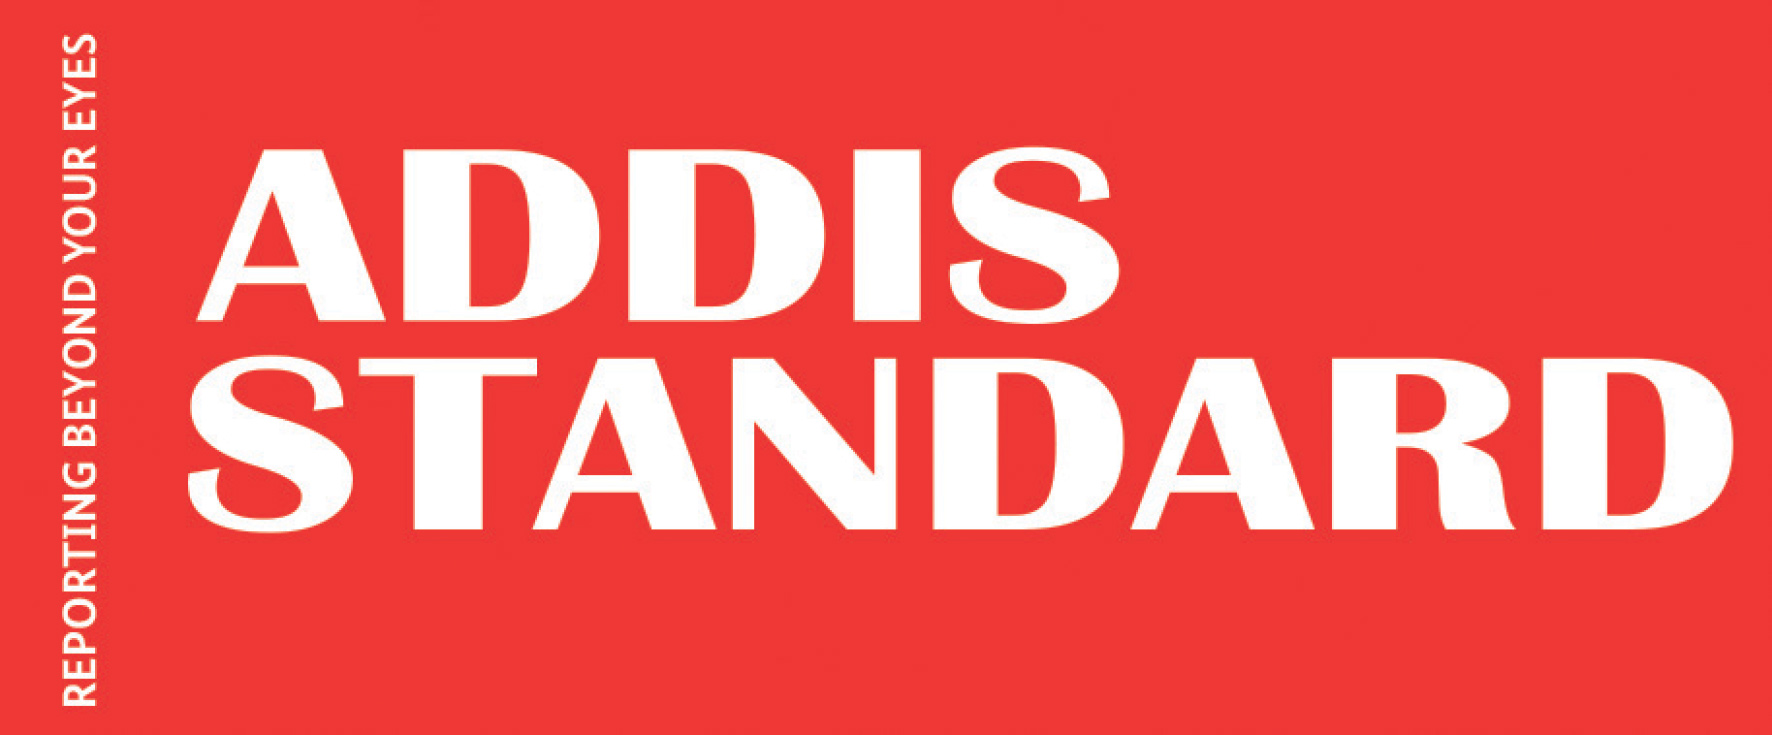 Addis standard journal